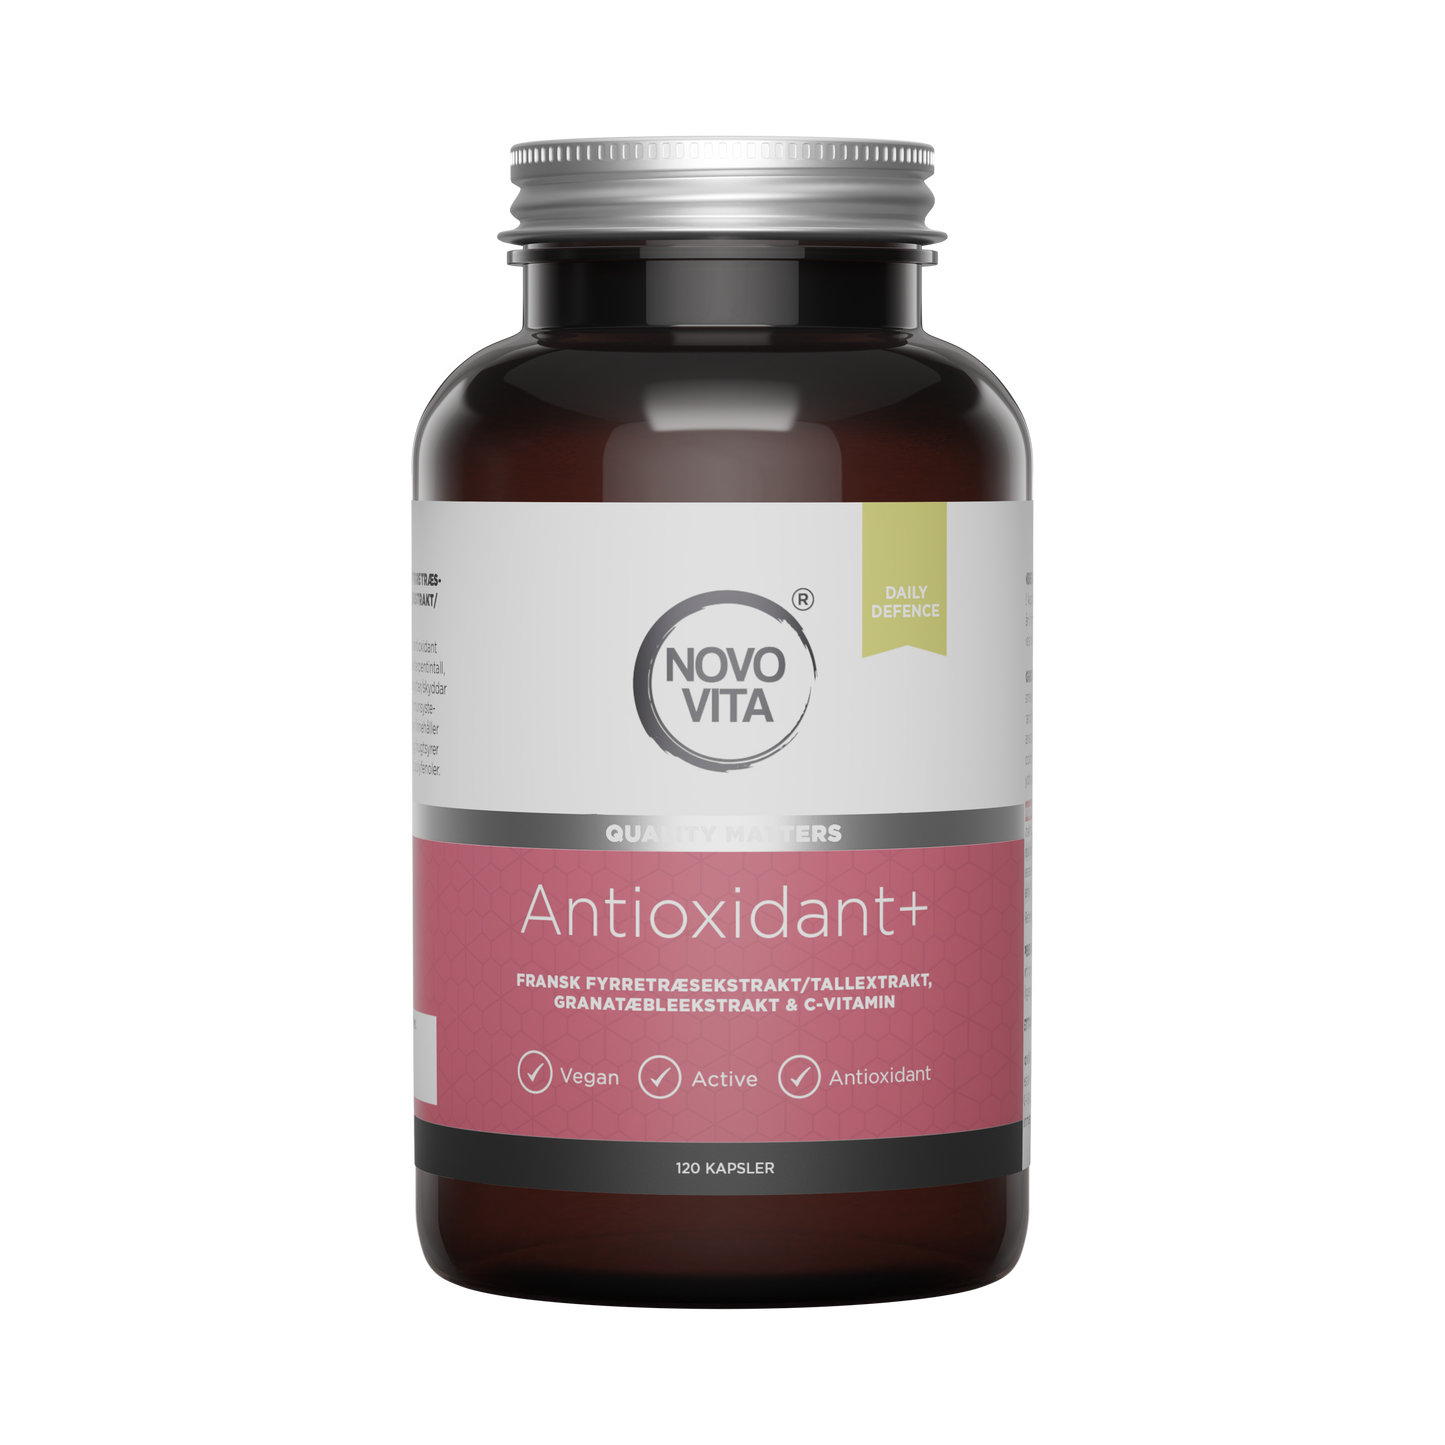 Antioxidant+